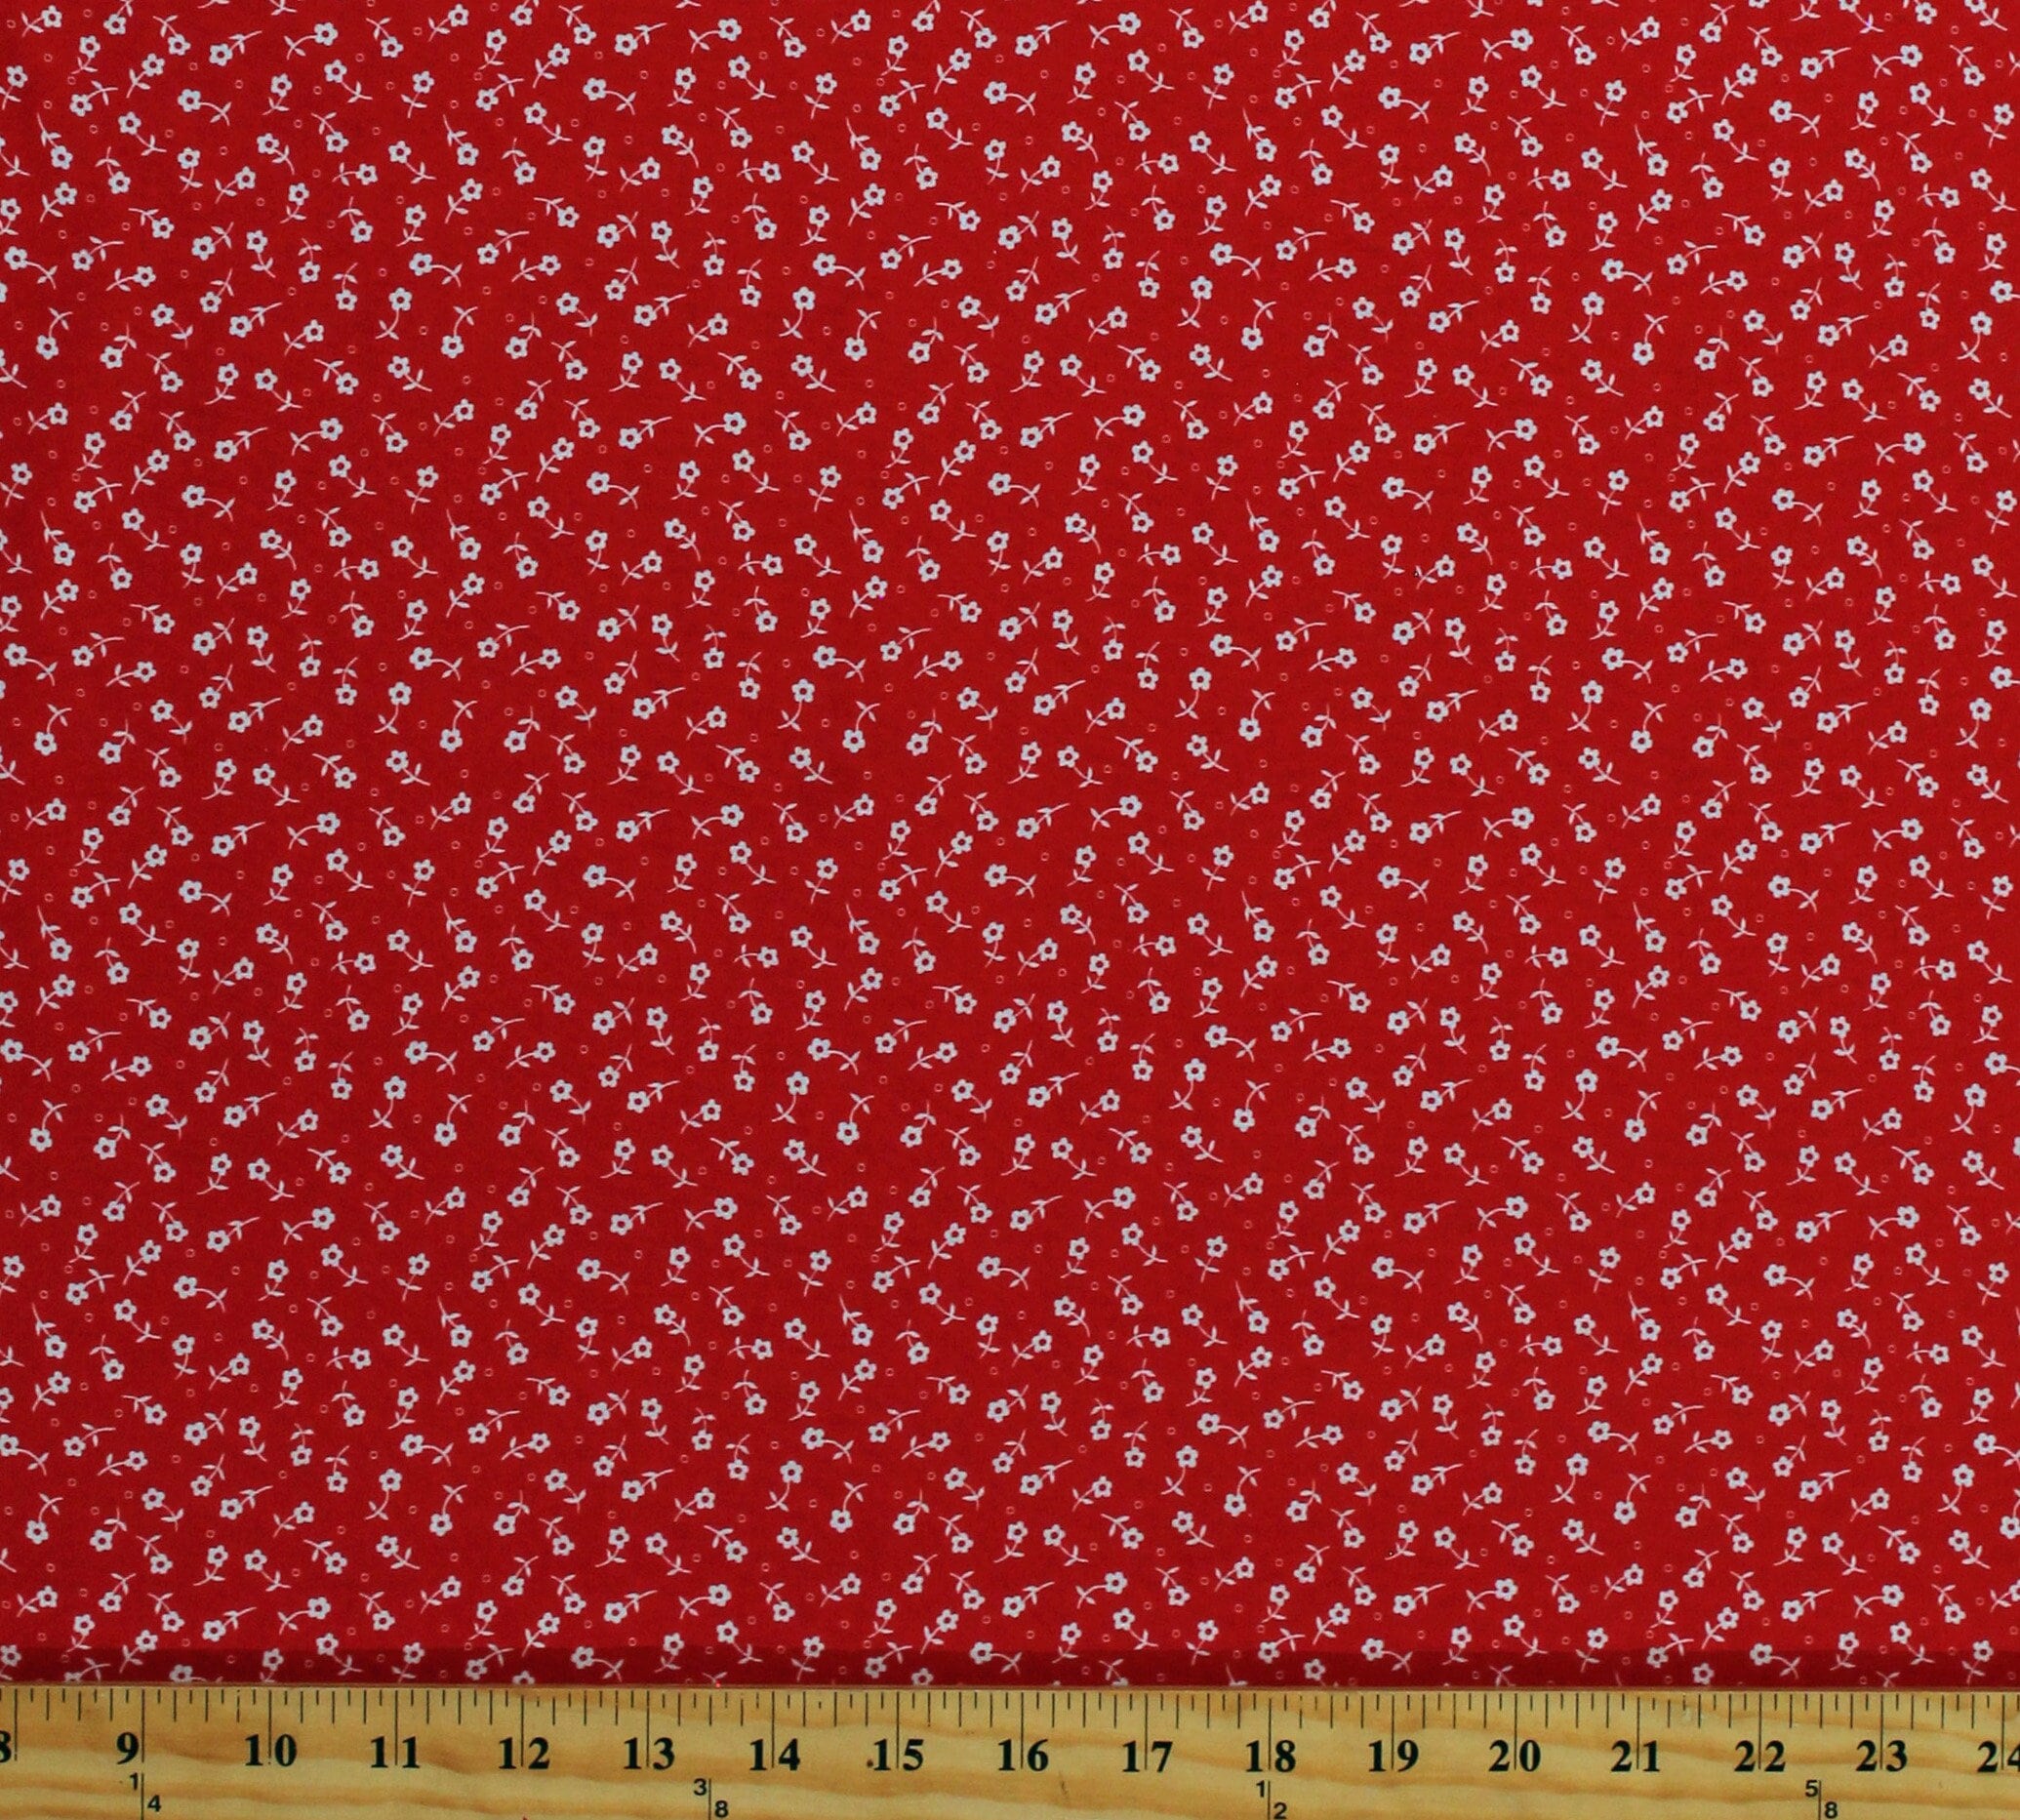 Flannel Buffalo Plaid 1.25 Buffalo Check Red Black Woven Cotton Flannel  Fabric (op1200-592)